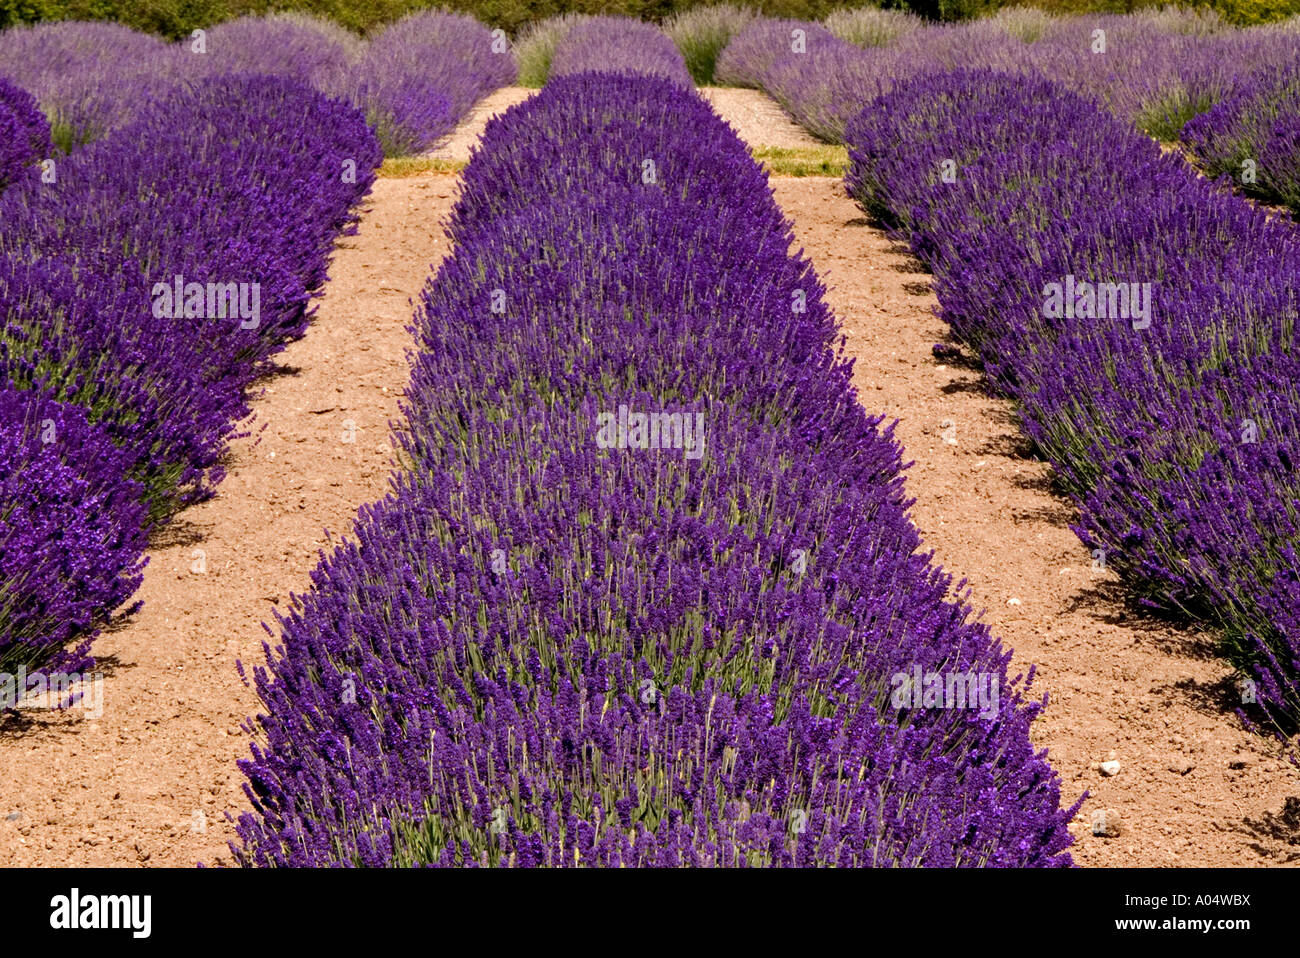 USA, Washington, Jardin du Soleil, row of hidcote lavender in field Stock Photo